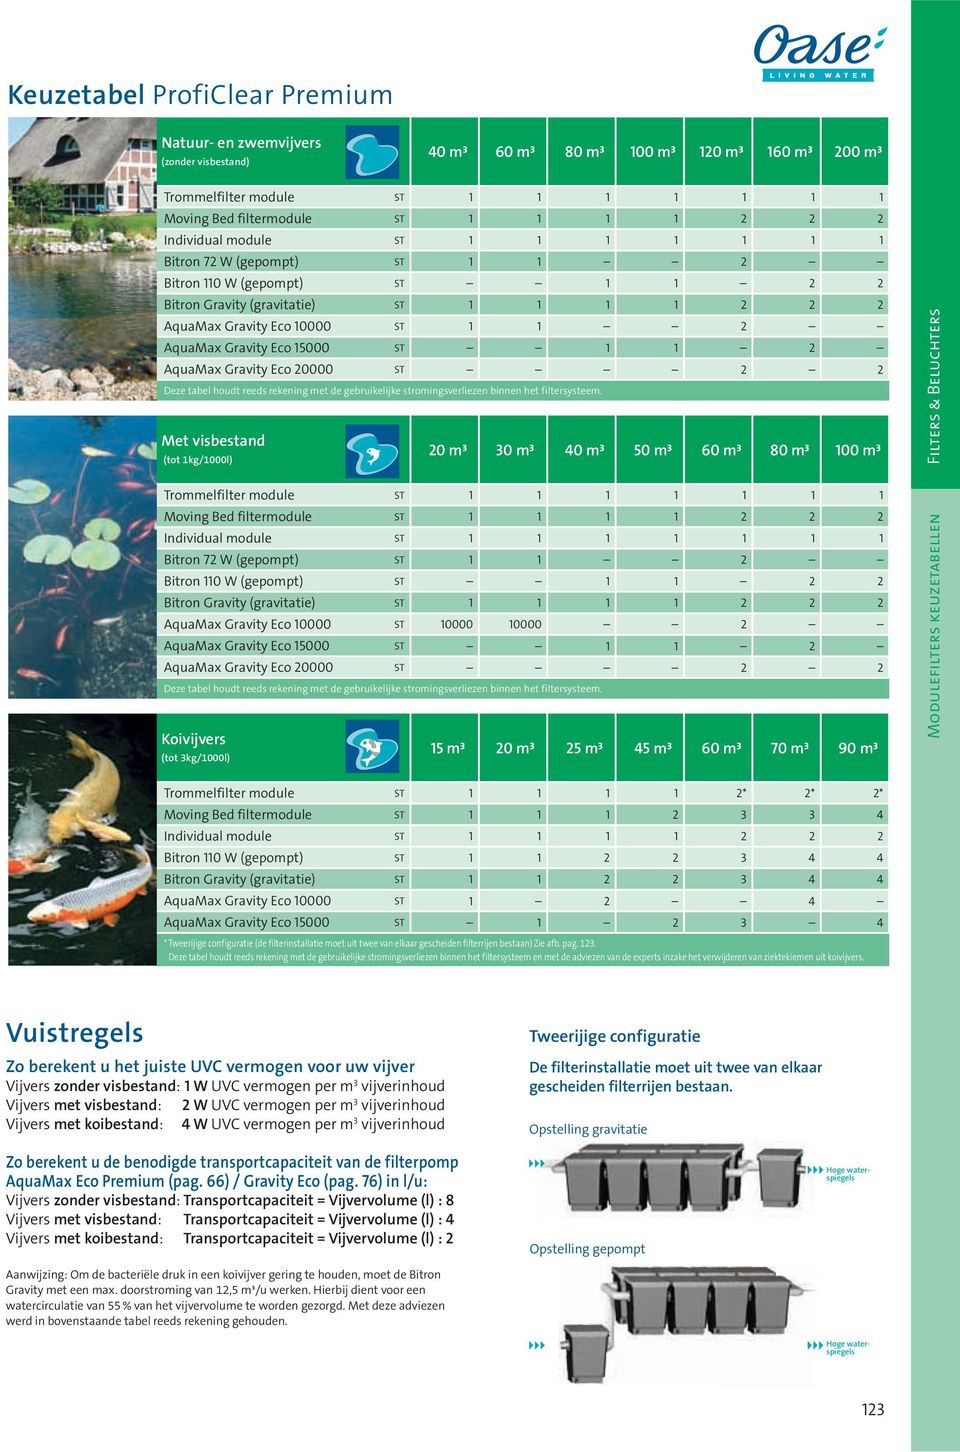 AquaMax Gravity Eco 20000 ST 2 2 Met visbestand (tot 1kg/1000l) 20 m³ 30 m³ 40 m³ 50 m³ 60 m³ 80 m³ 100 m³ Trommelfilter module ST 1 1 1 1 1 1 1 Moving Bed filtermodule ST 1 1 1 1 2 2 2 Individual